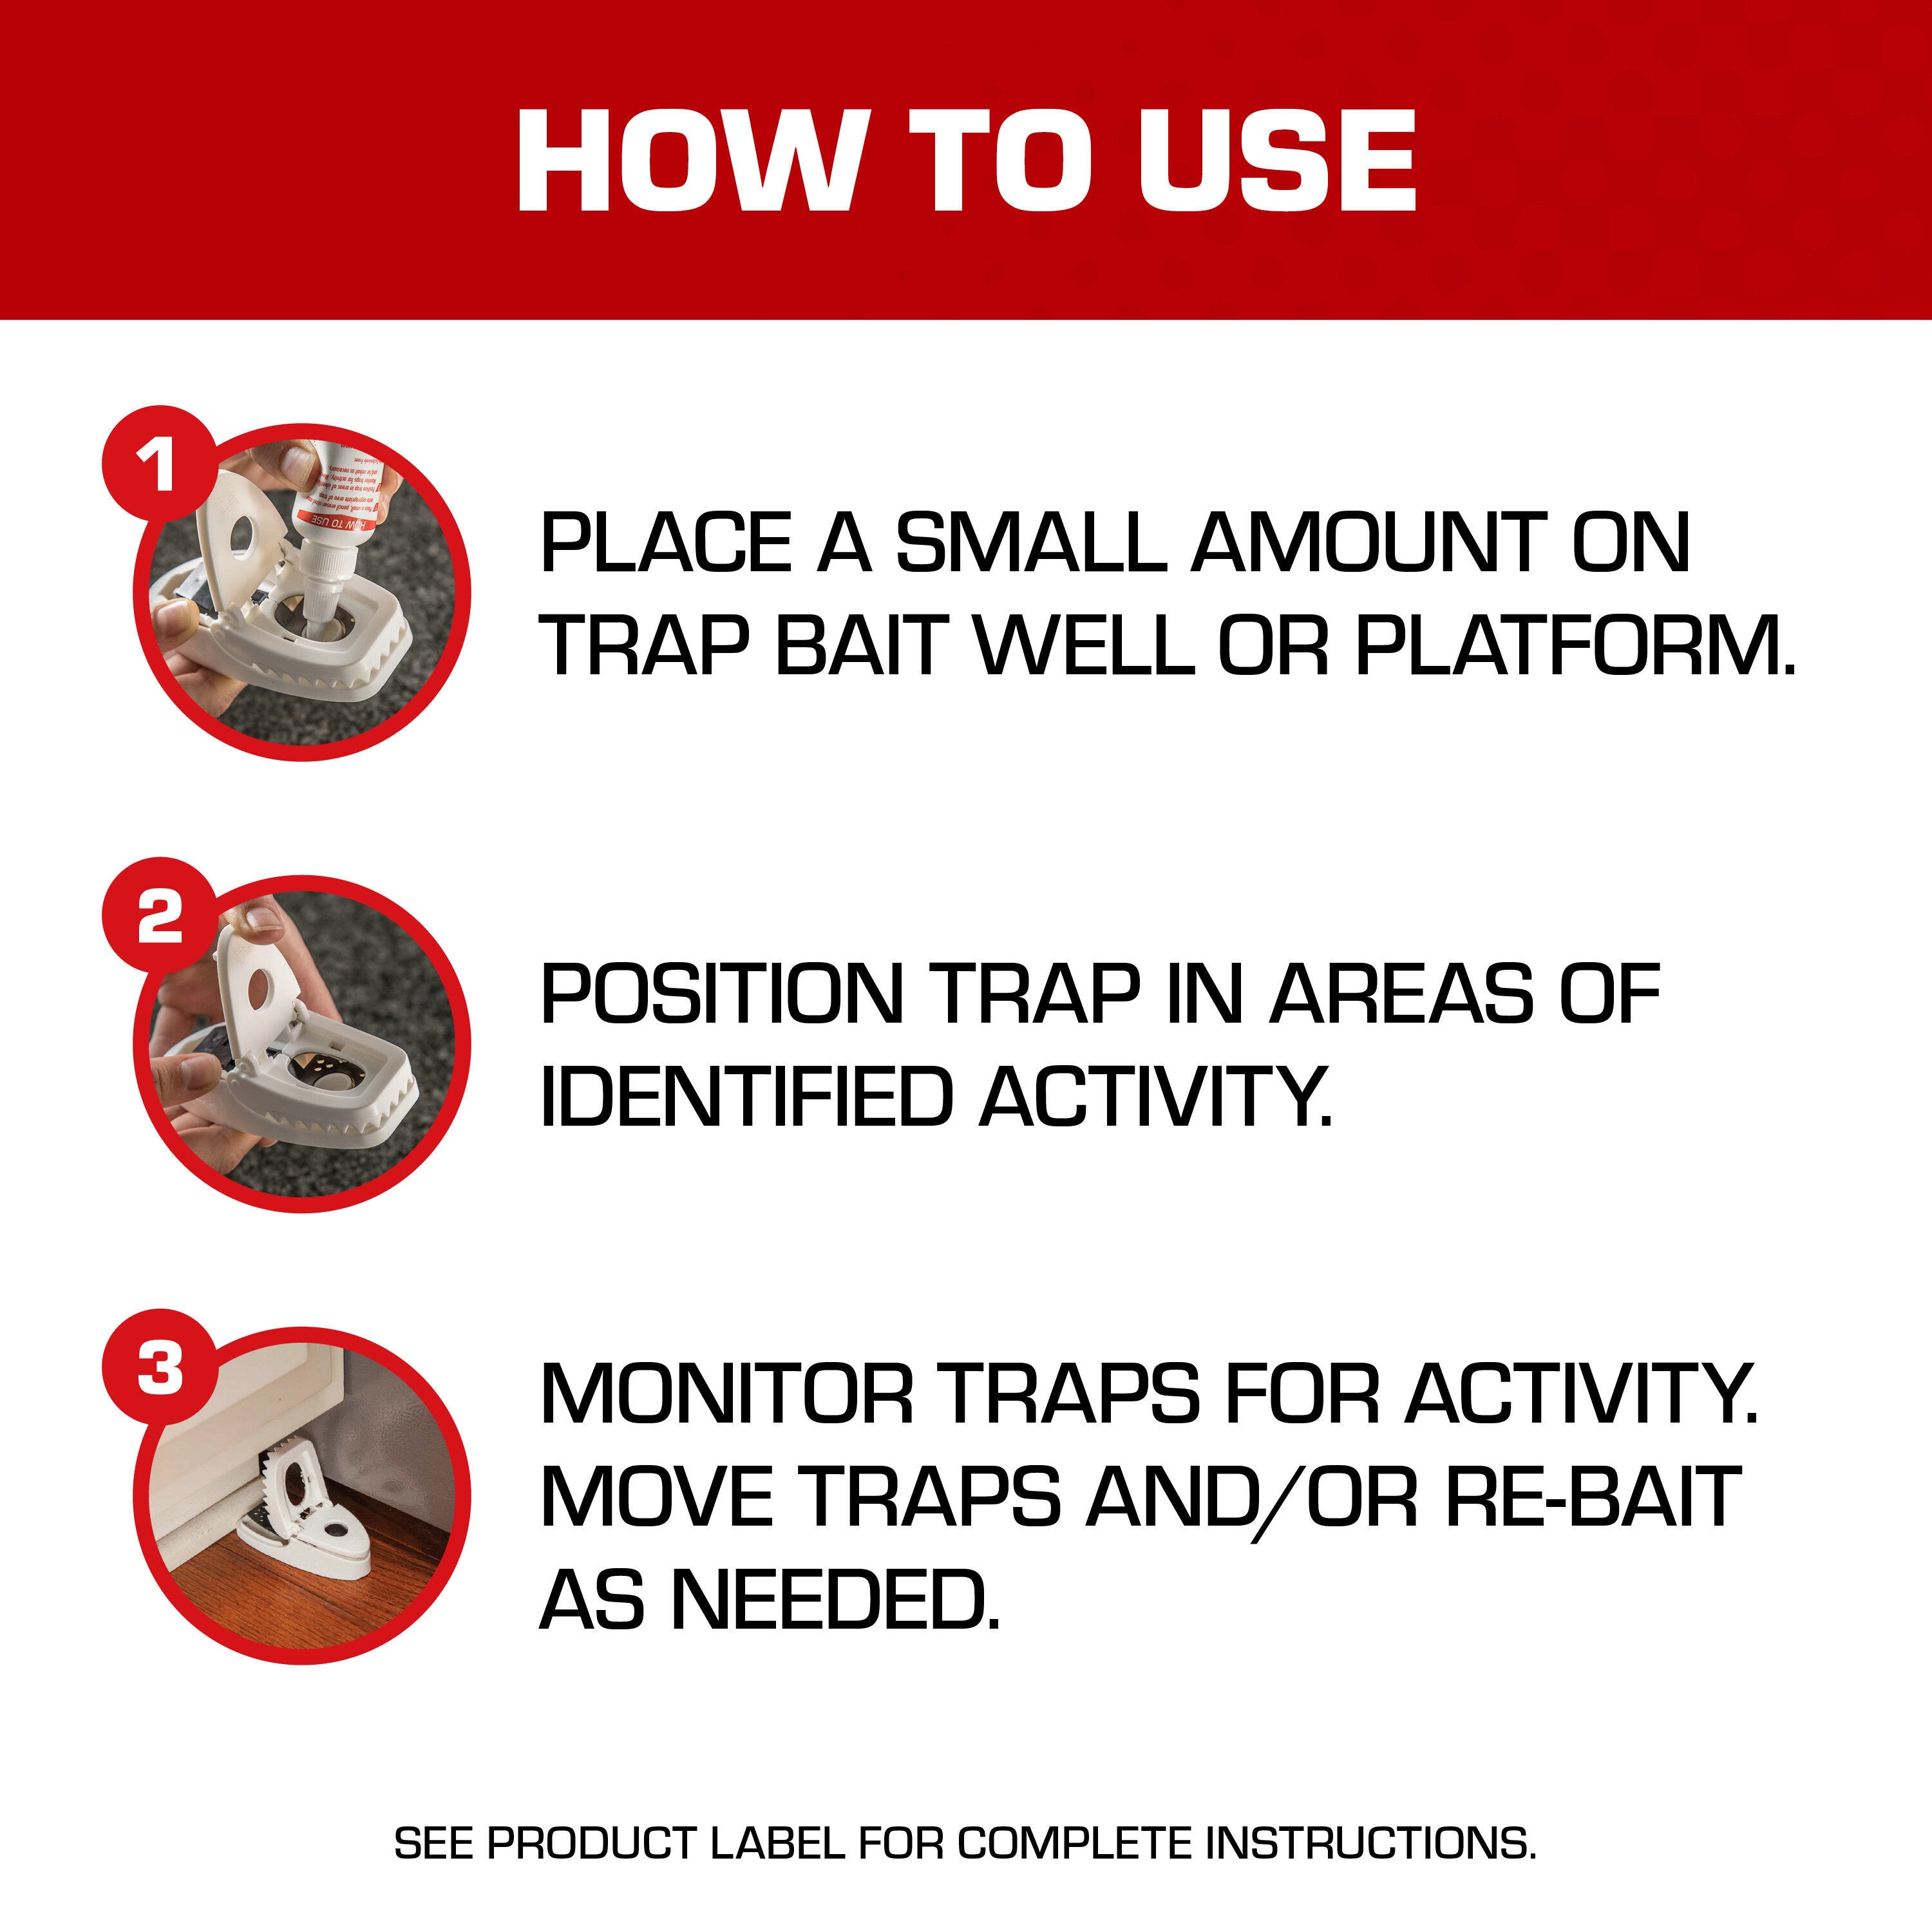 Tomcat Mouse Snap Traps (8) + Attractant Gel (1) Value Pack